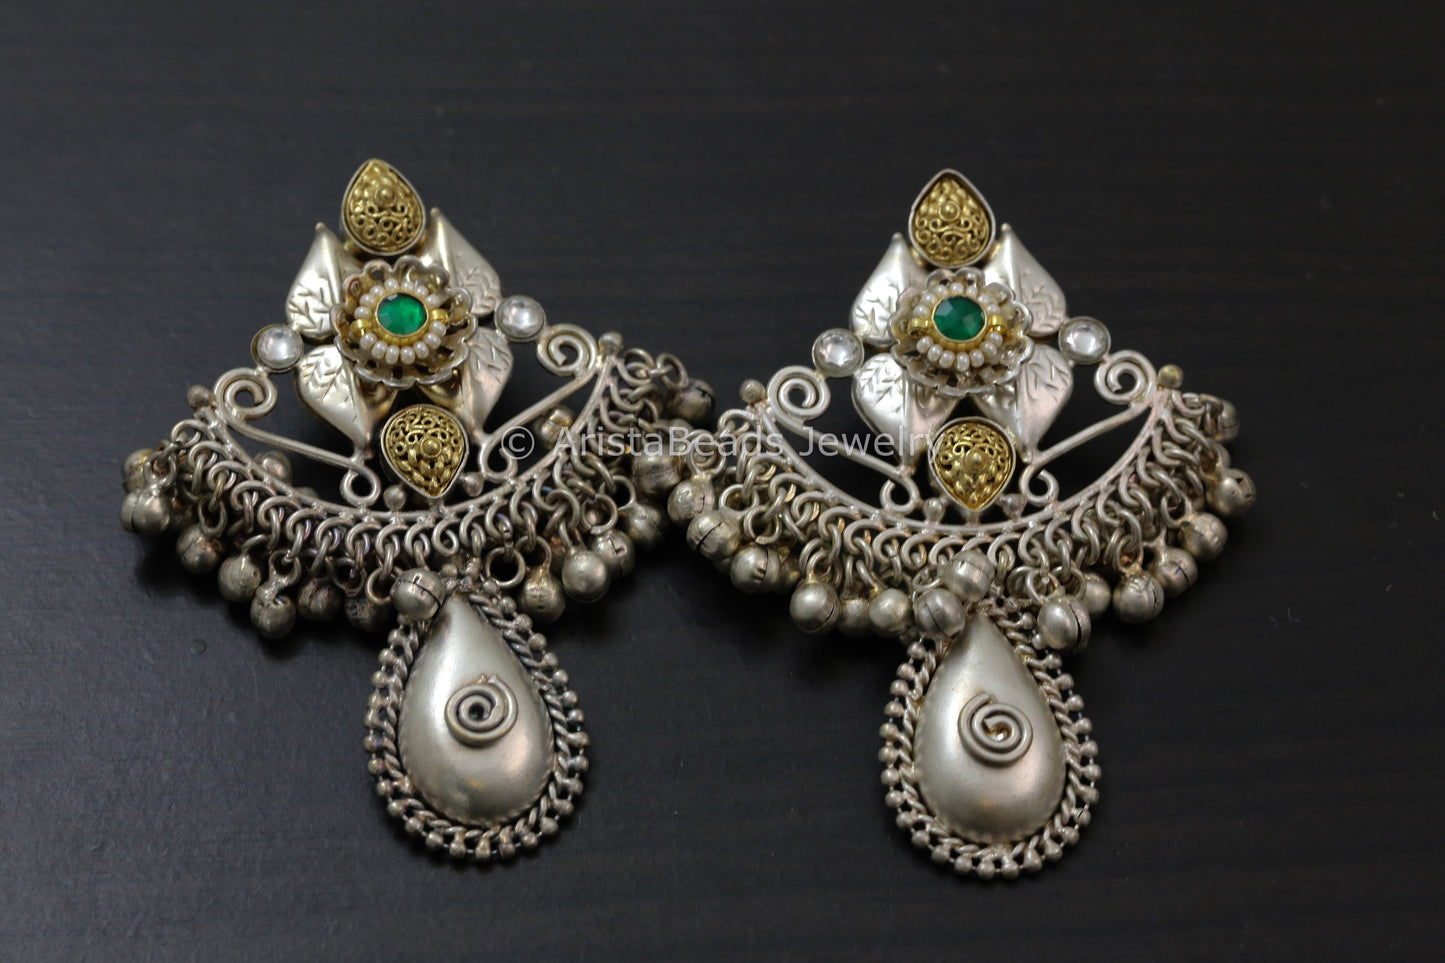 Large 925 Silver Polish Earrings - Emerald